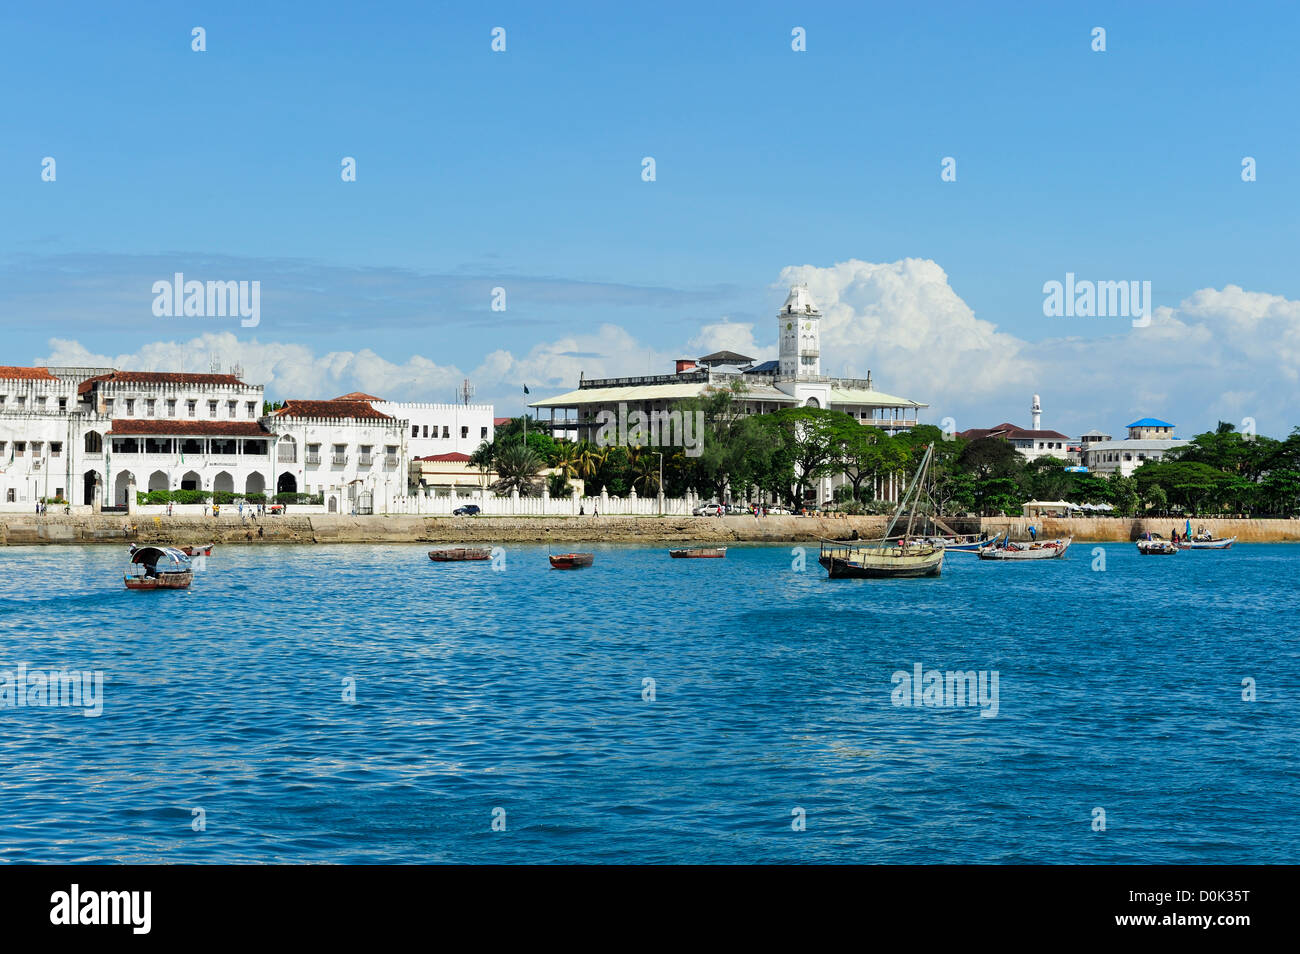 Beit al-Ajaib Palace and waterfront at Stone Town, Zanzibar, Tanzania, East Africa Stock Photo